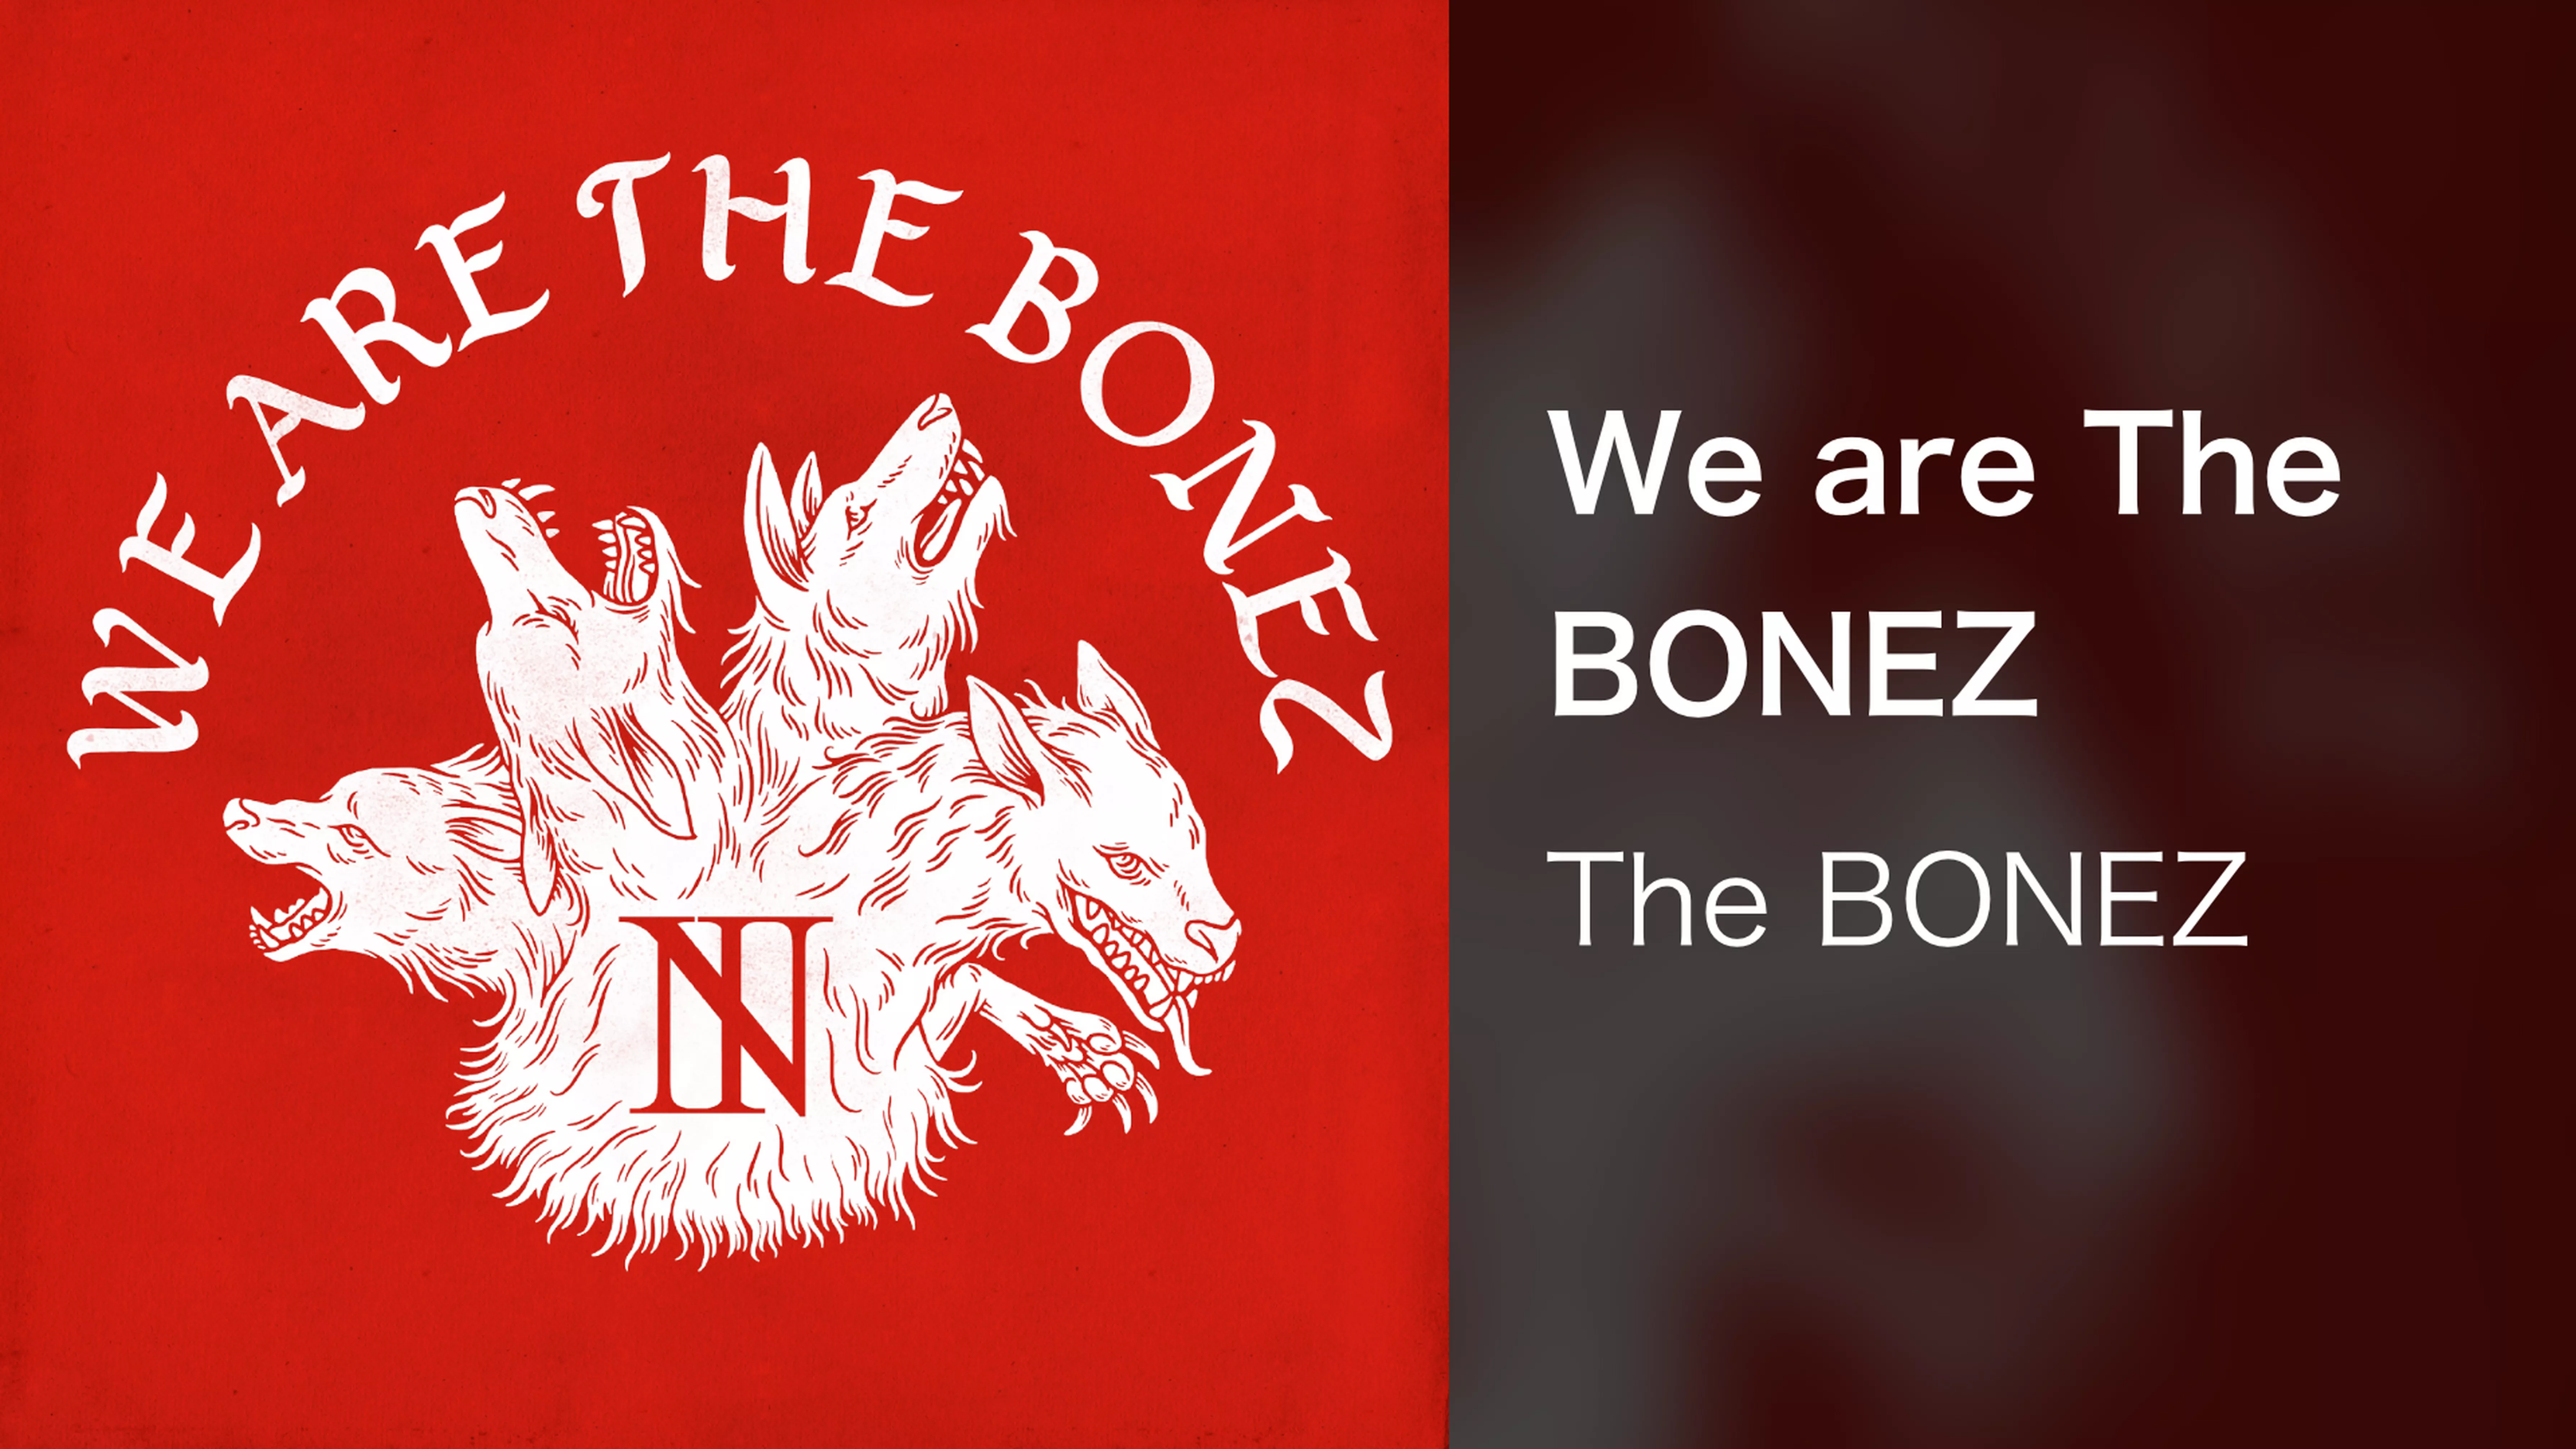 We are The BONEZ